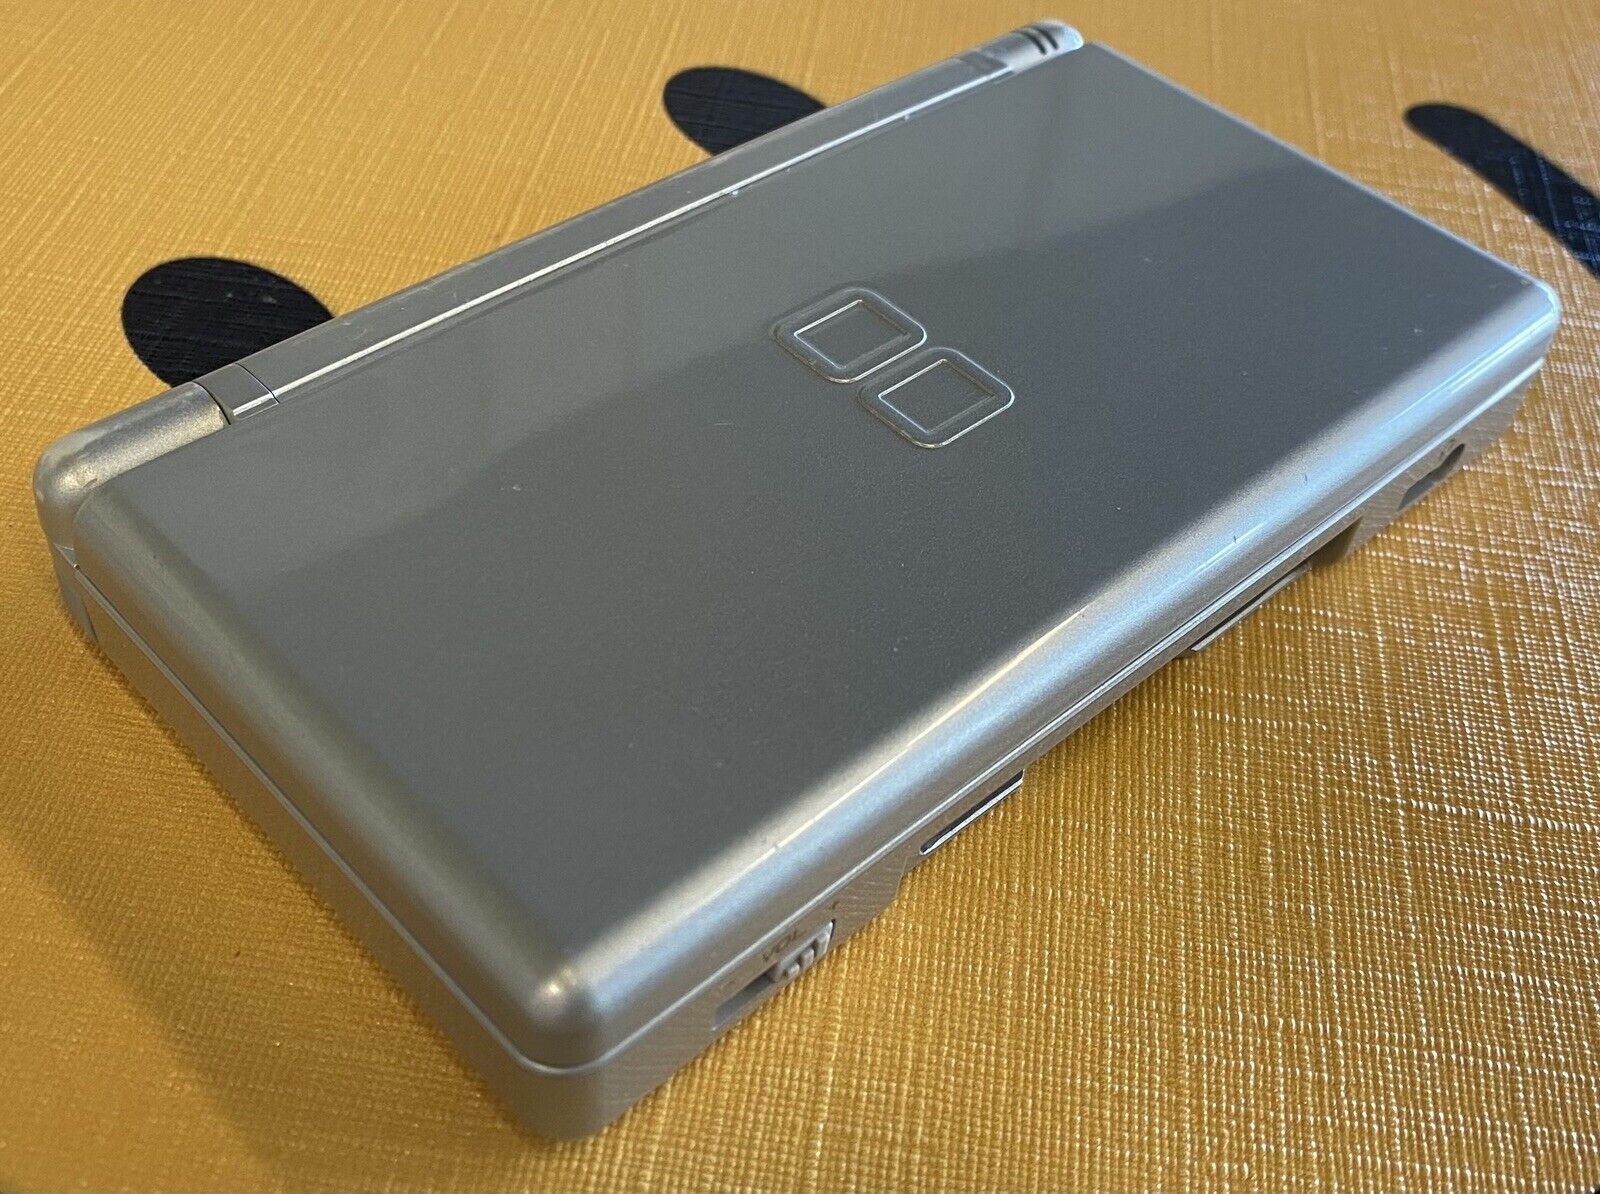 Bærbar komplikationer Mekanisk Nintendo DS Lite (Metallic Silver) with Stylus and Charger - Tested  45496718466 | eBay